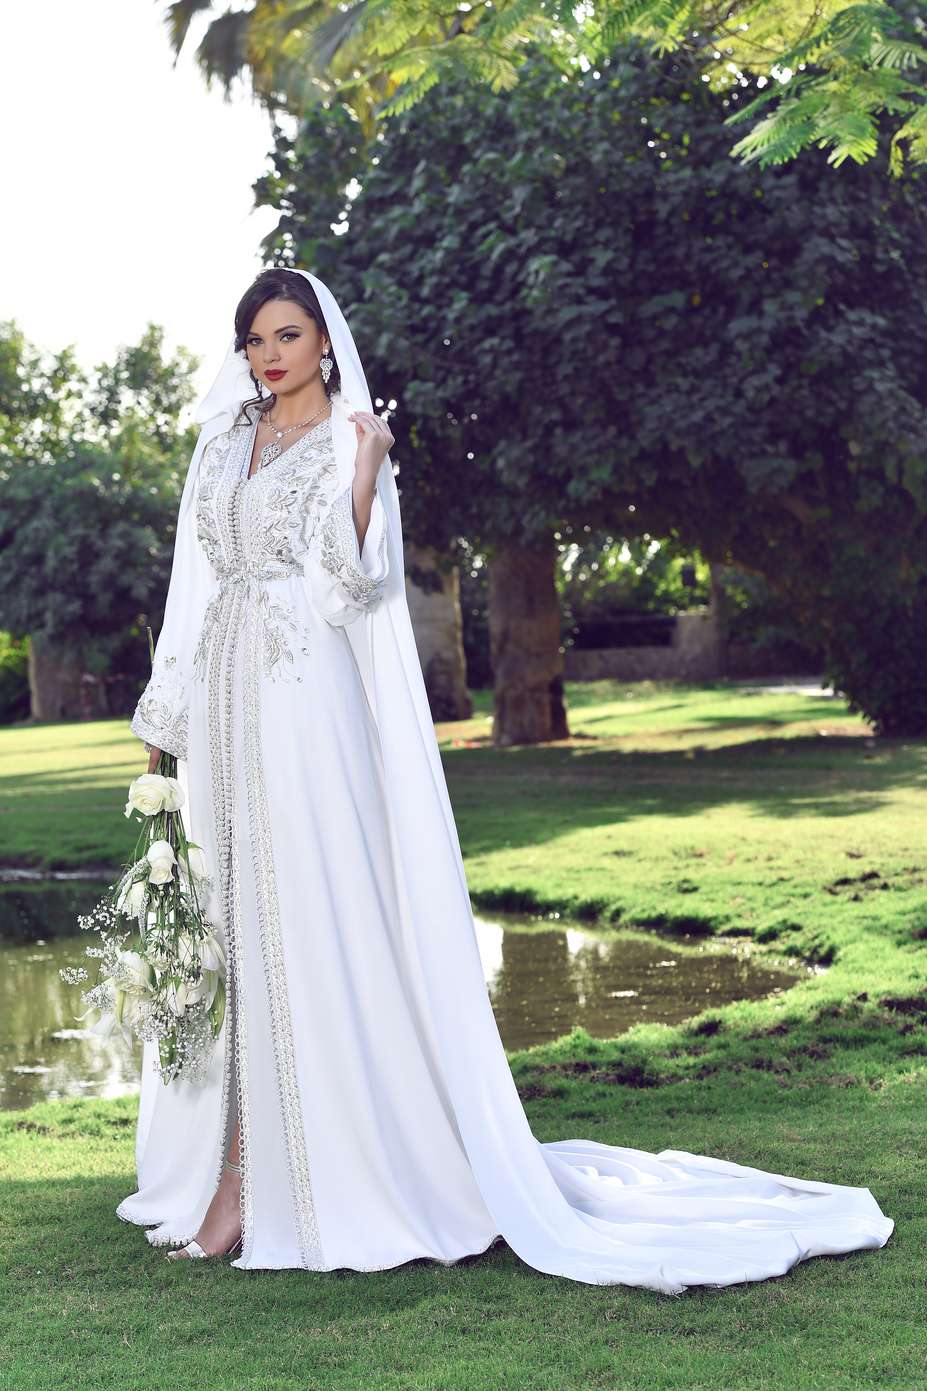 Selma Benomar Reveals Her 2018 Bridal Collection of Kaftans